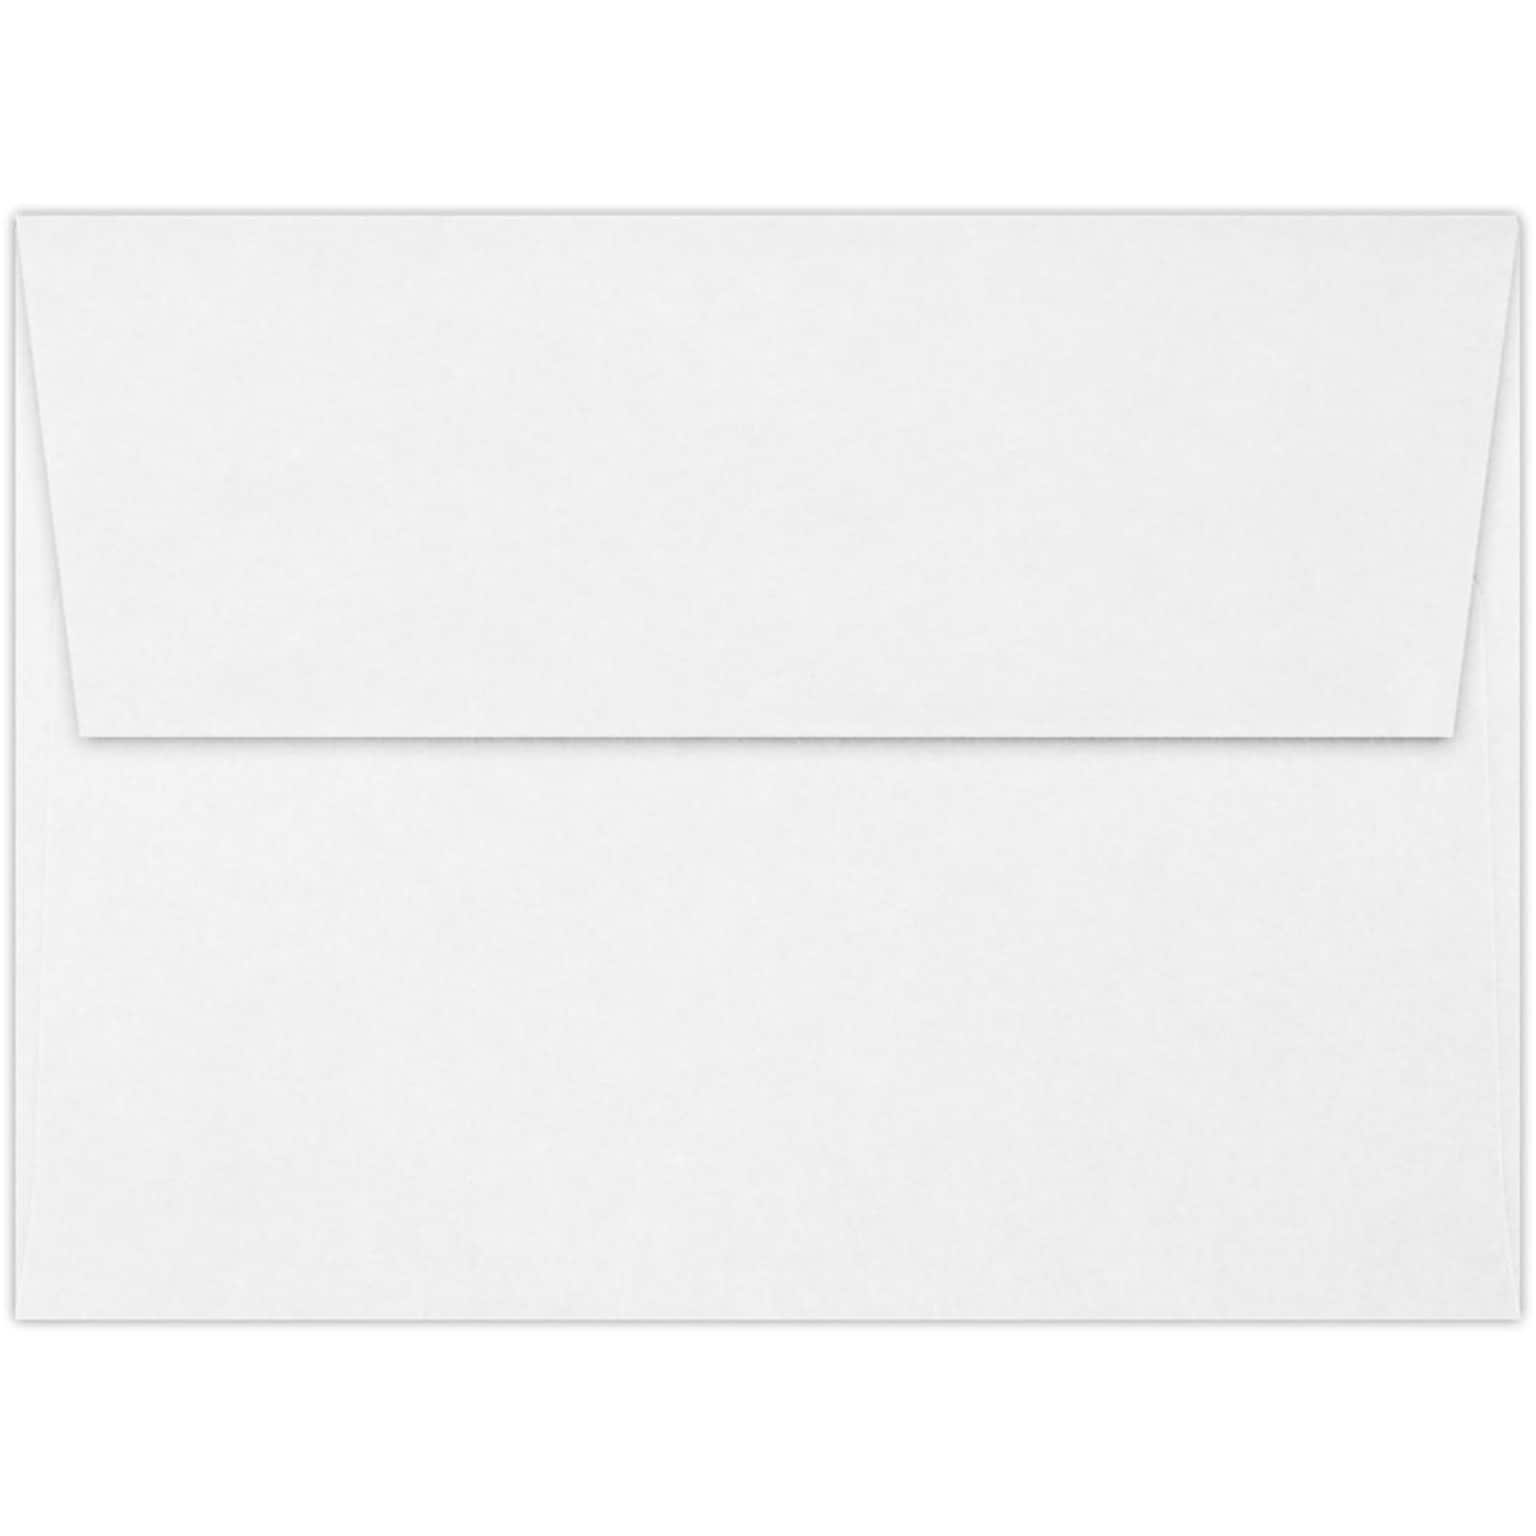 LUX A6 Invitation Envelopes (4 3/4 x 6 1/2) 250/Pack, 70lb. Classic Linen® Solar White (4875-70SWLI-250)